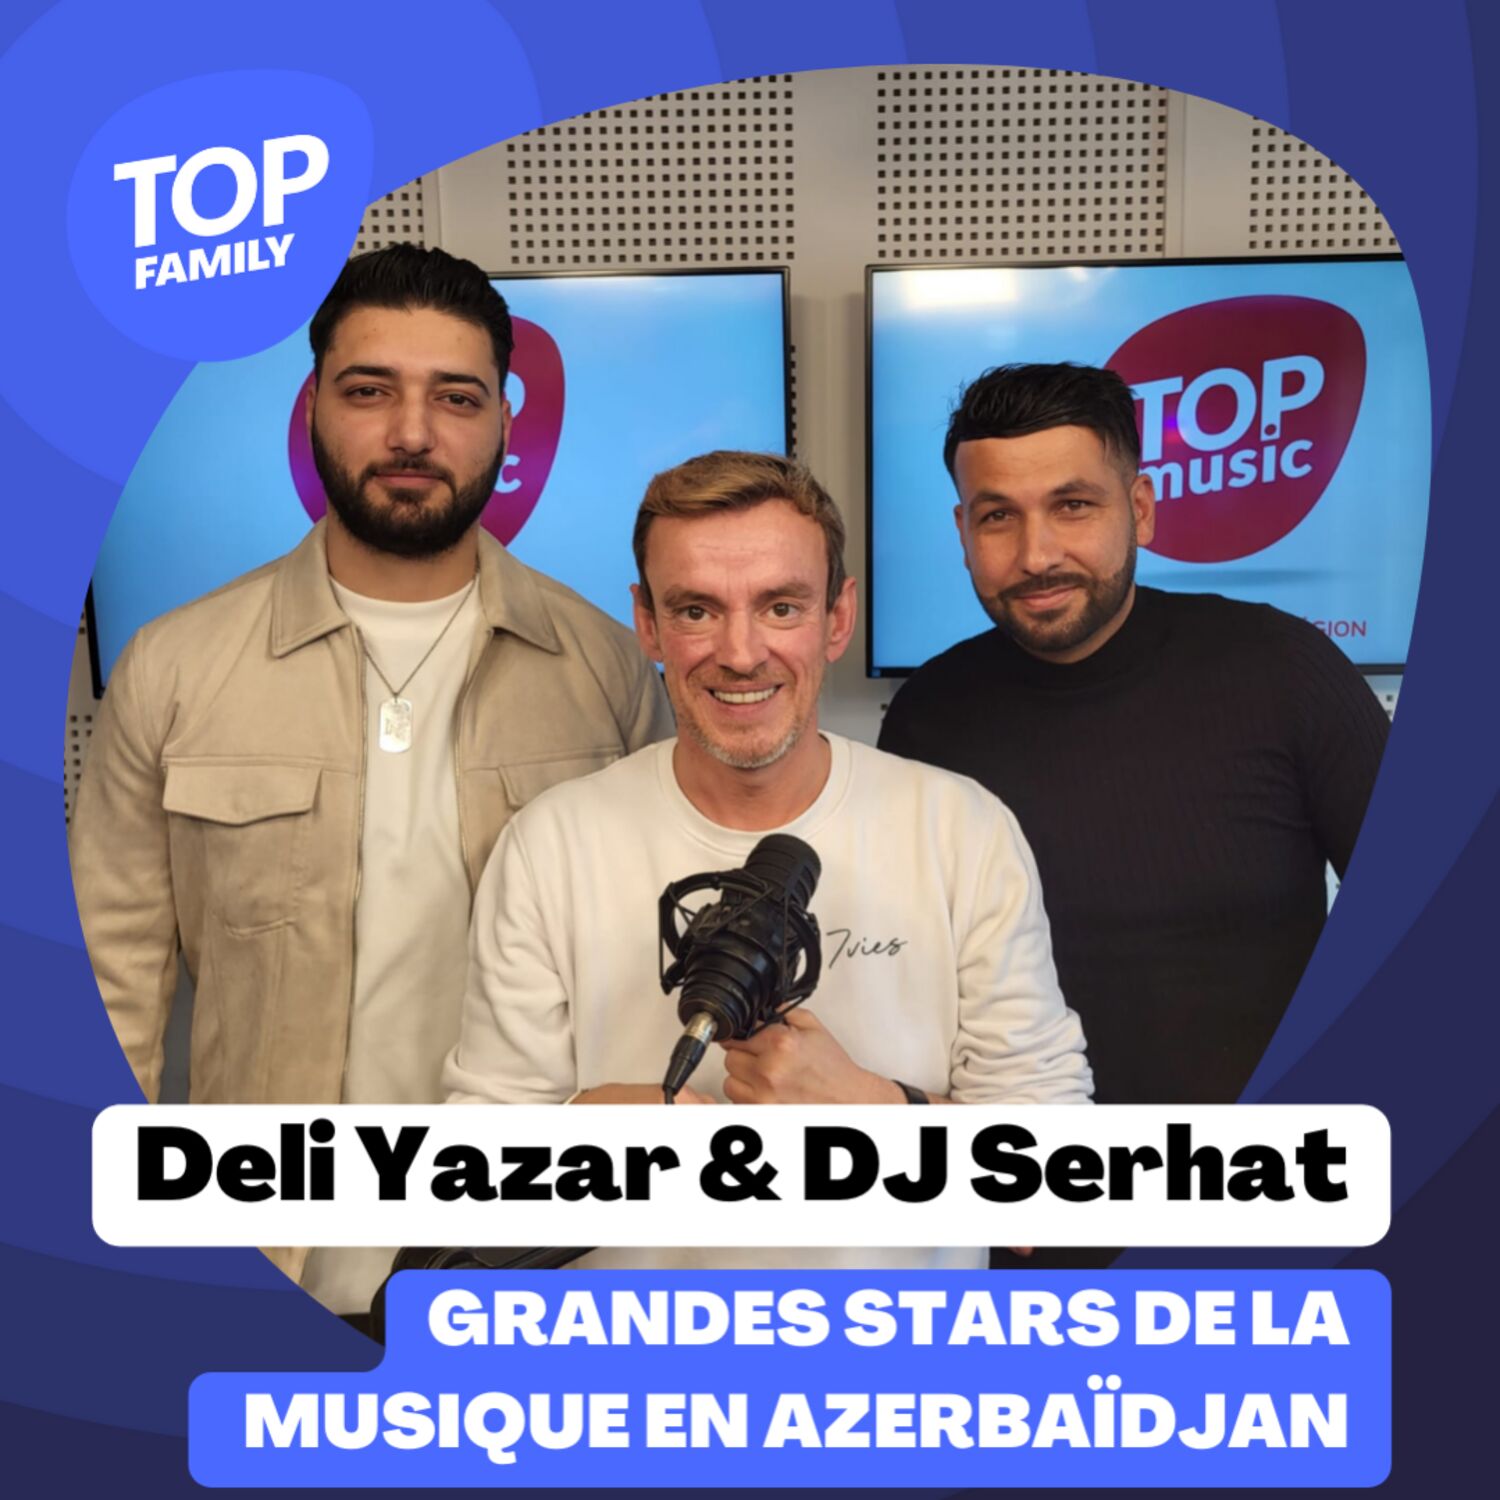 Deli Yazar & DJ Serhat